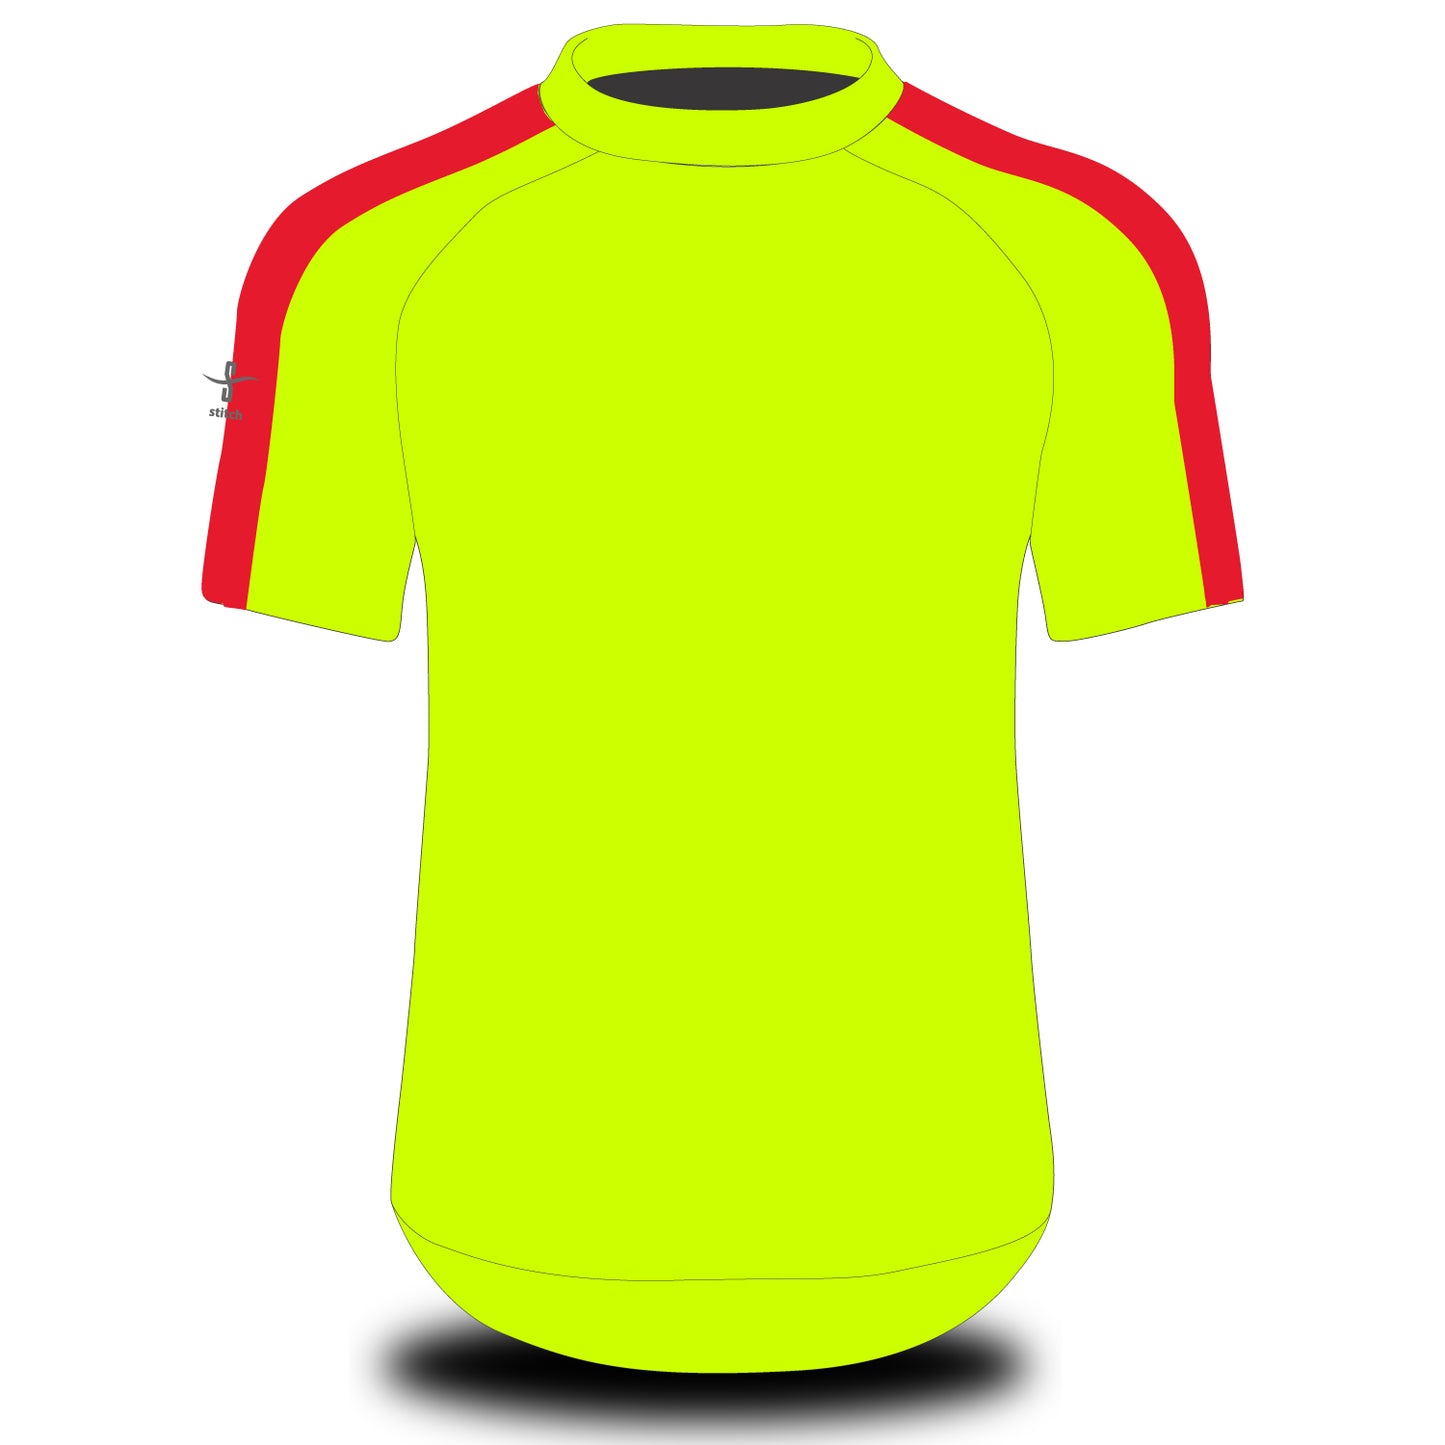 Bradford on Avon Rowing Club Fluorescent Yellow Tech Top Short Sleeve